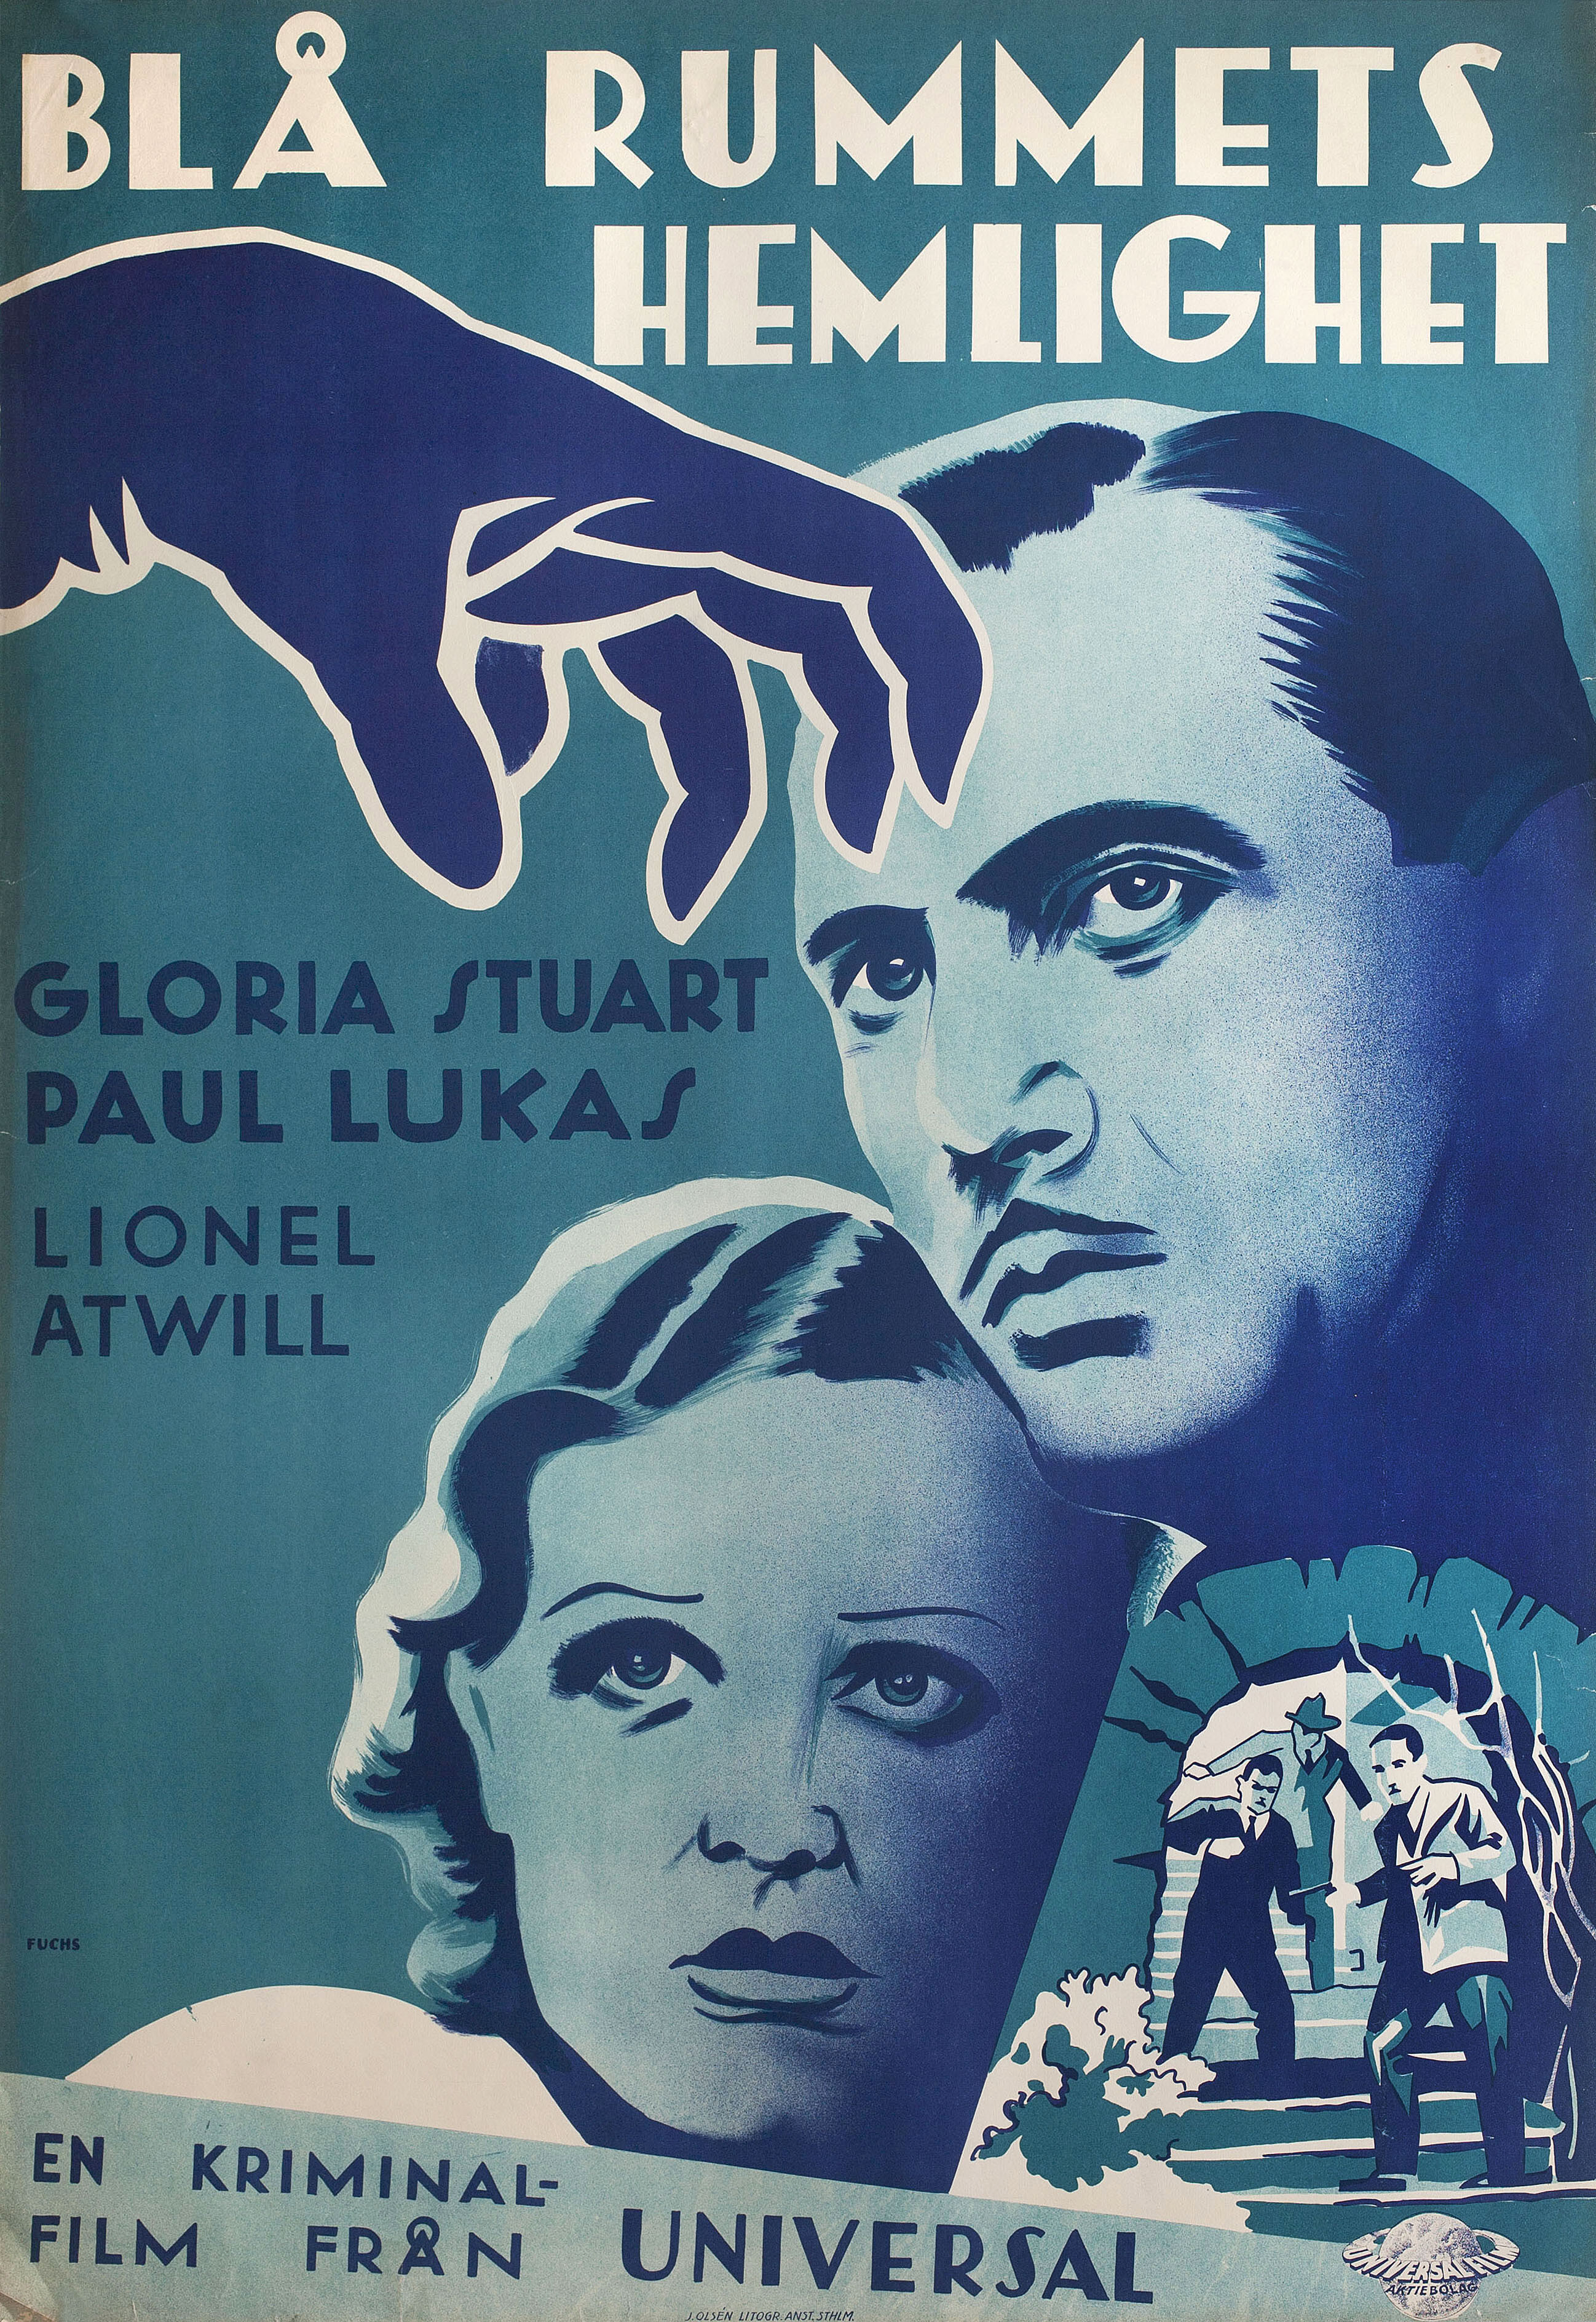 Тайна Голубой комнаты (Secret of the Blue Room, 1933), режиссёр Курт Нойманн, постер к фильму в стиле ар-деко (Швеция, 1933 год), автор Уолтер Фукс